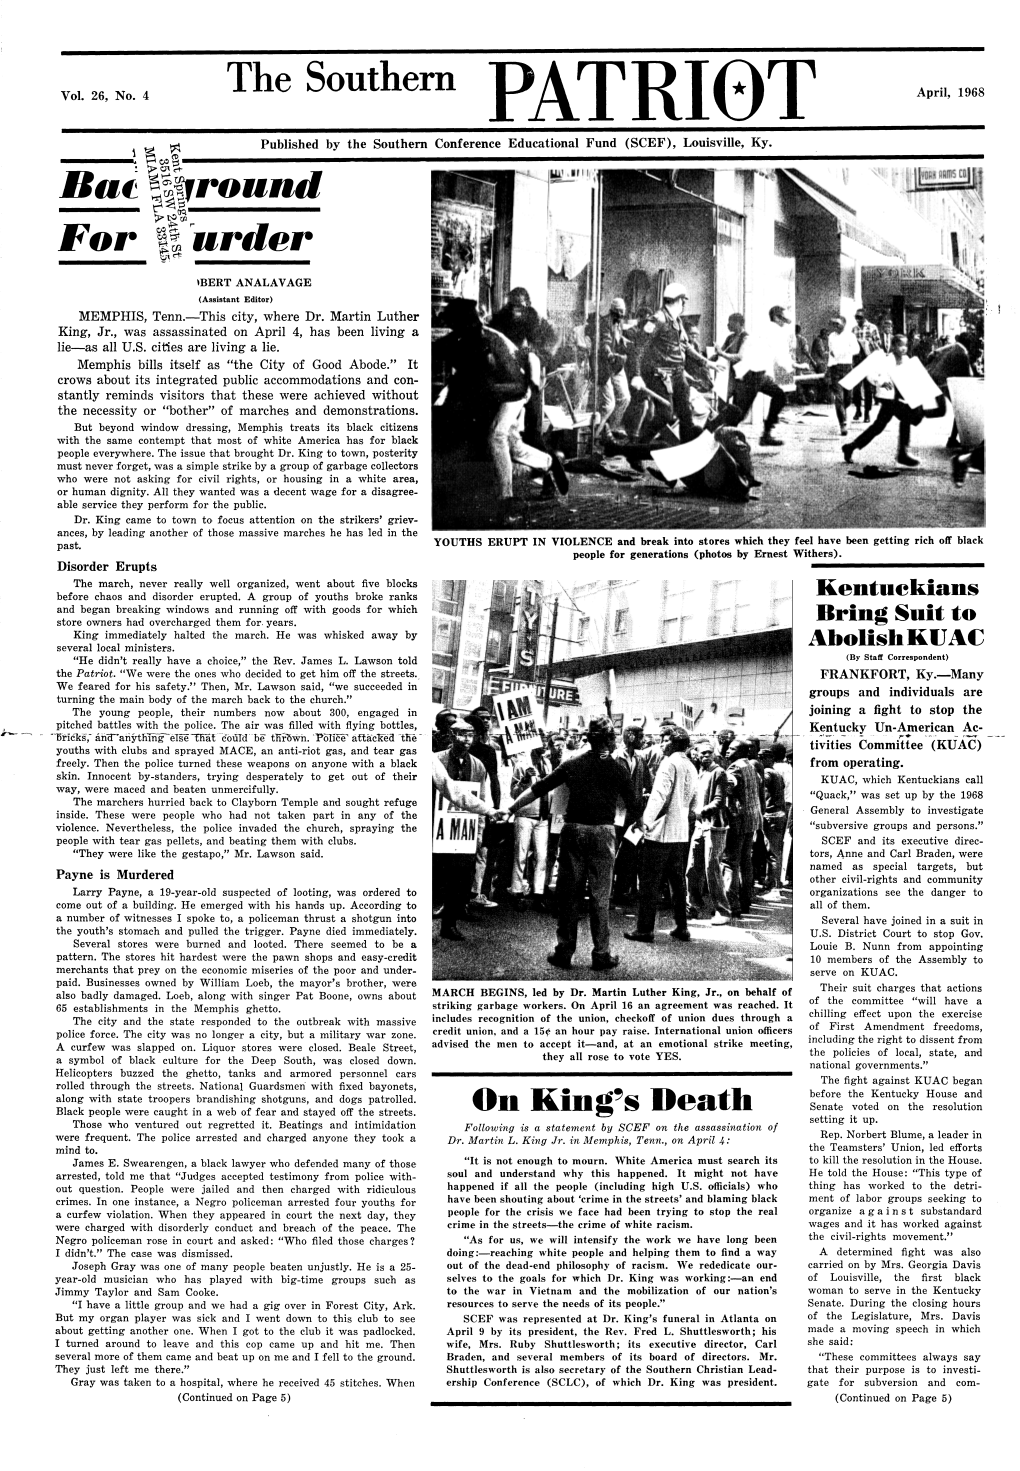 The Southern Patriot, April 1968